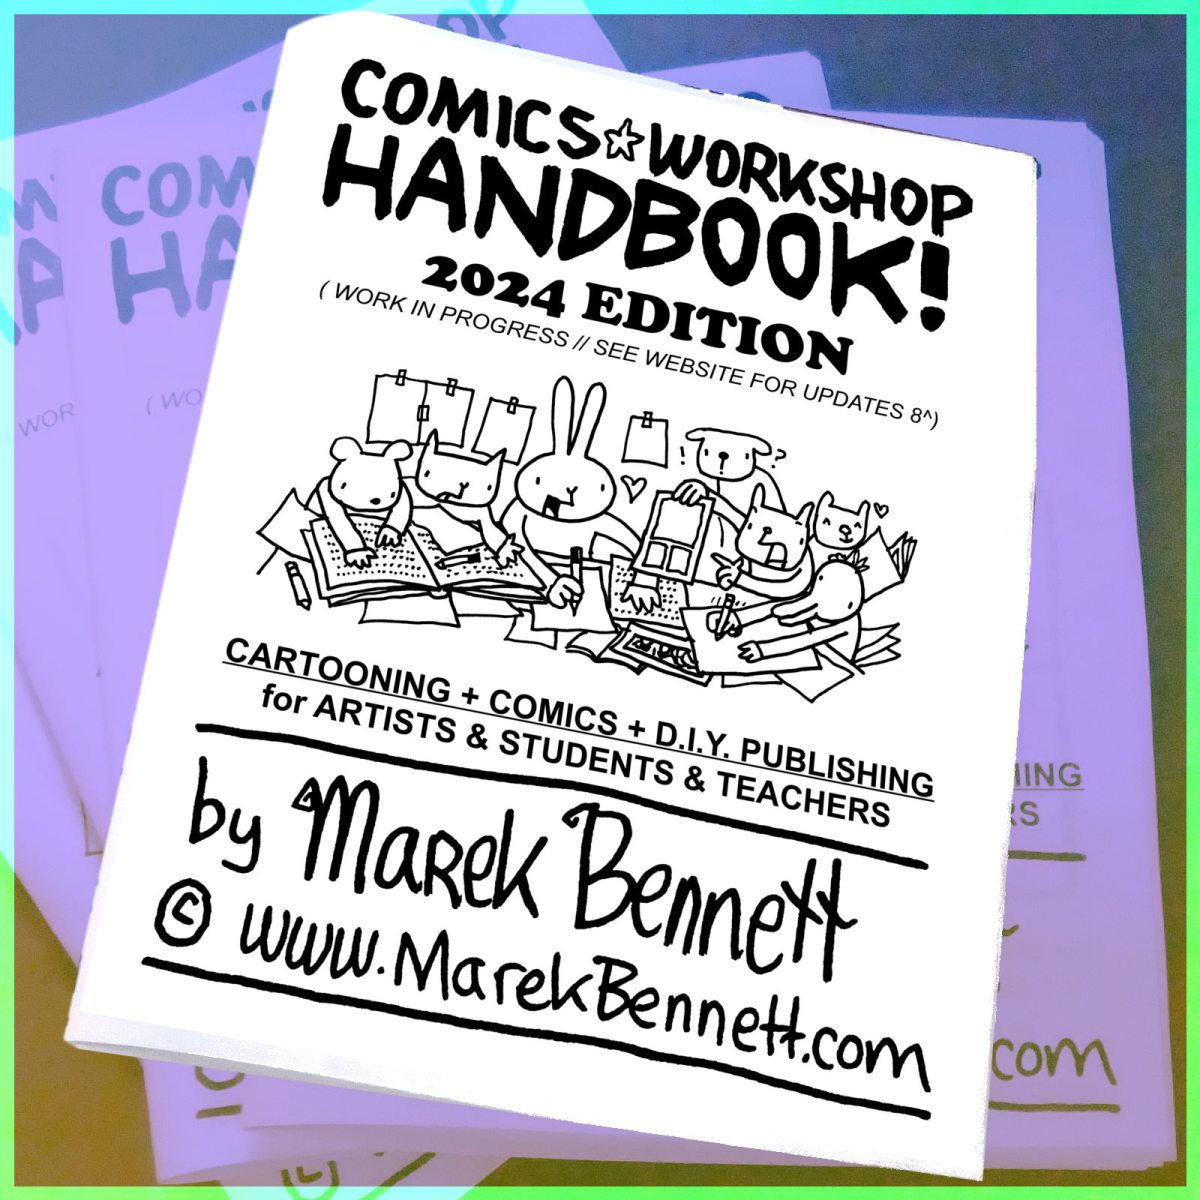 Comics Workshop Handbook ✍ 2024 Edition!